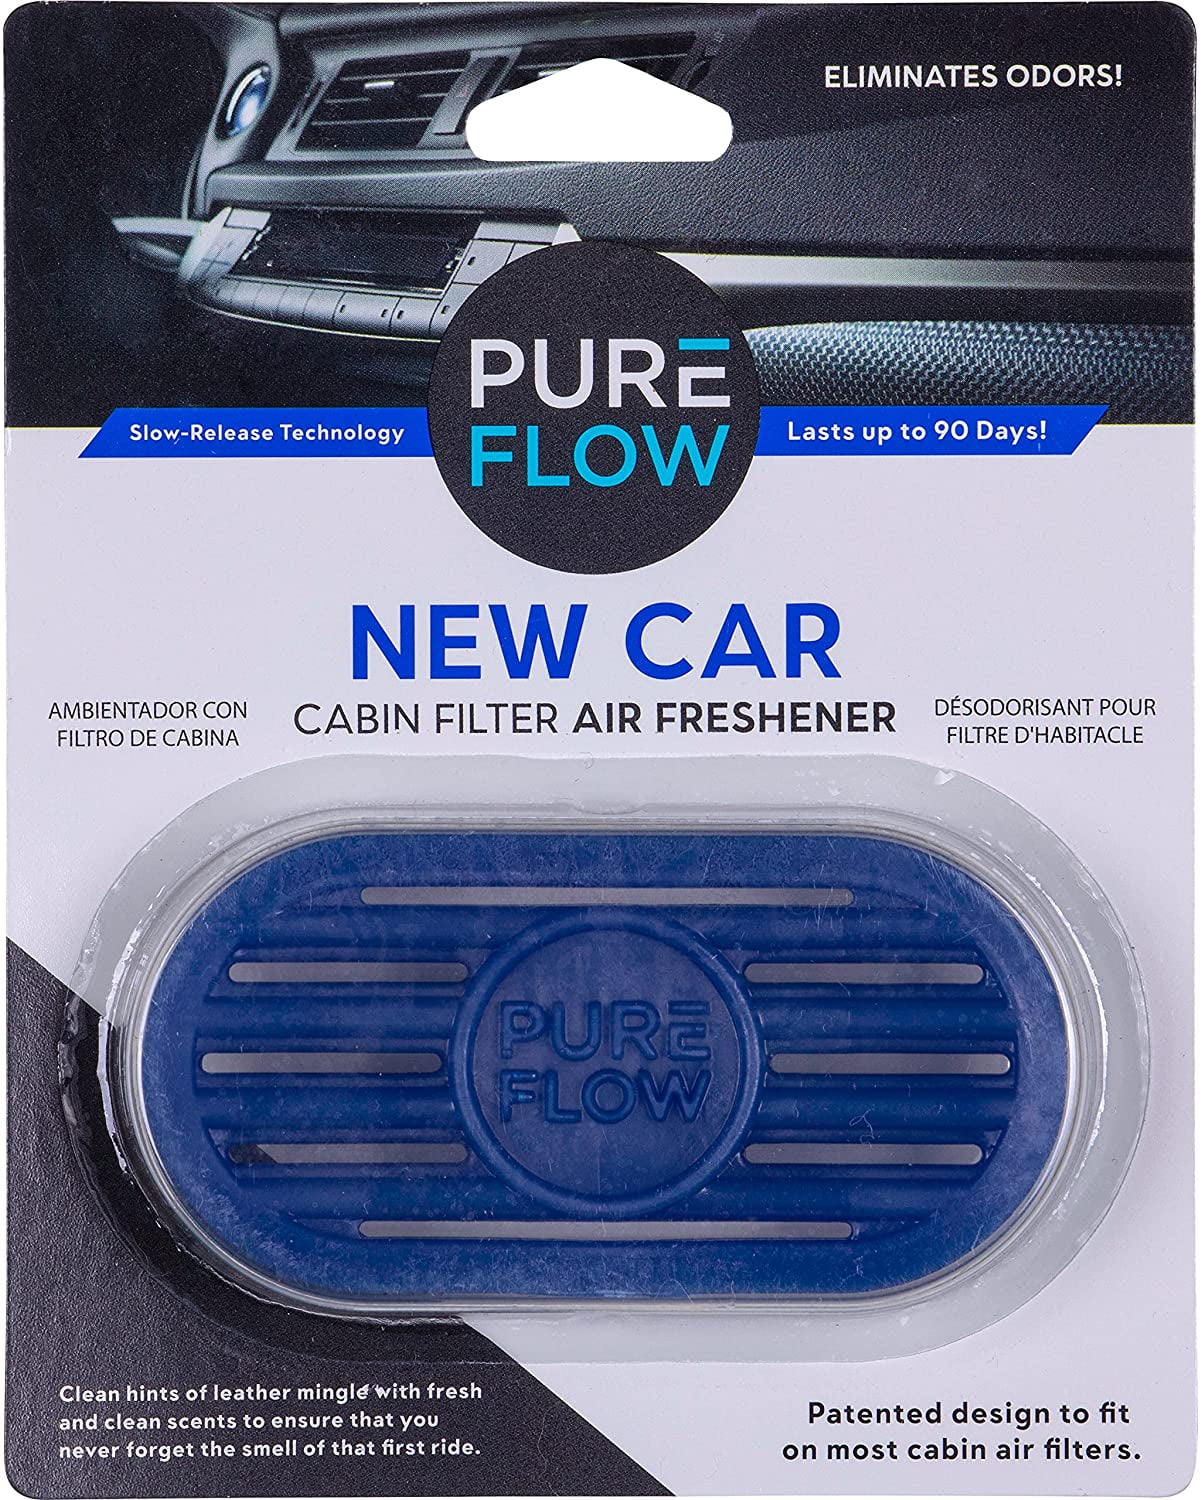 New Car, Pureflow Cabin Filter Air Freshener with Odor Eliminator 